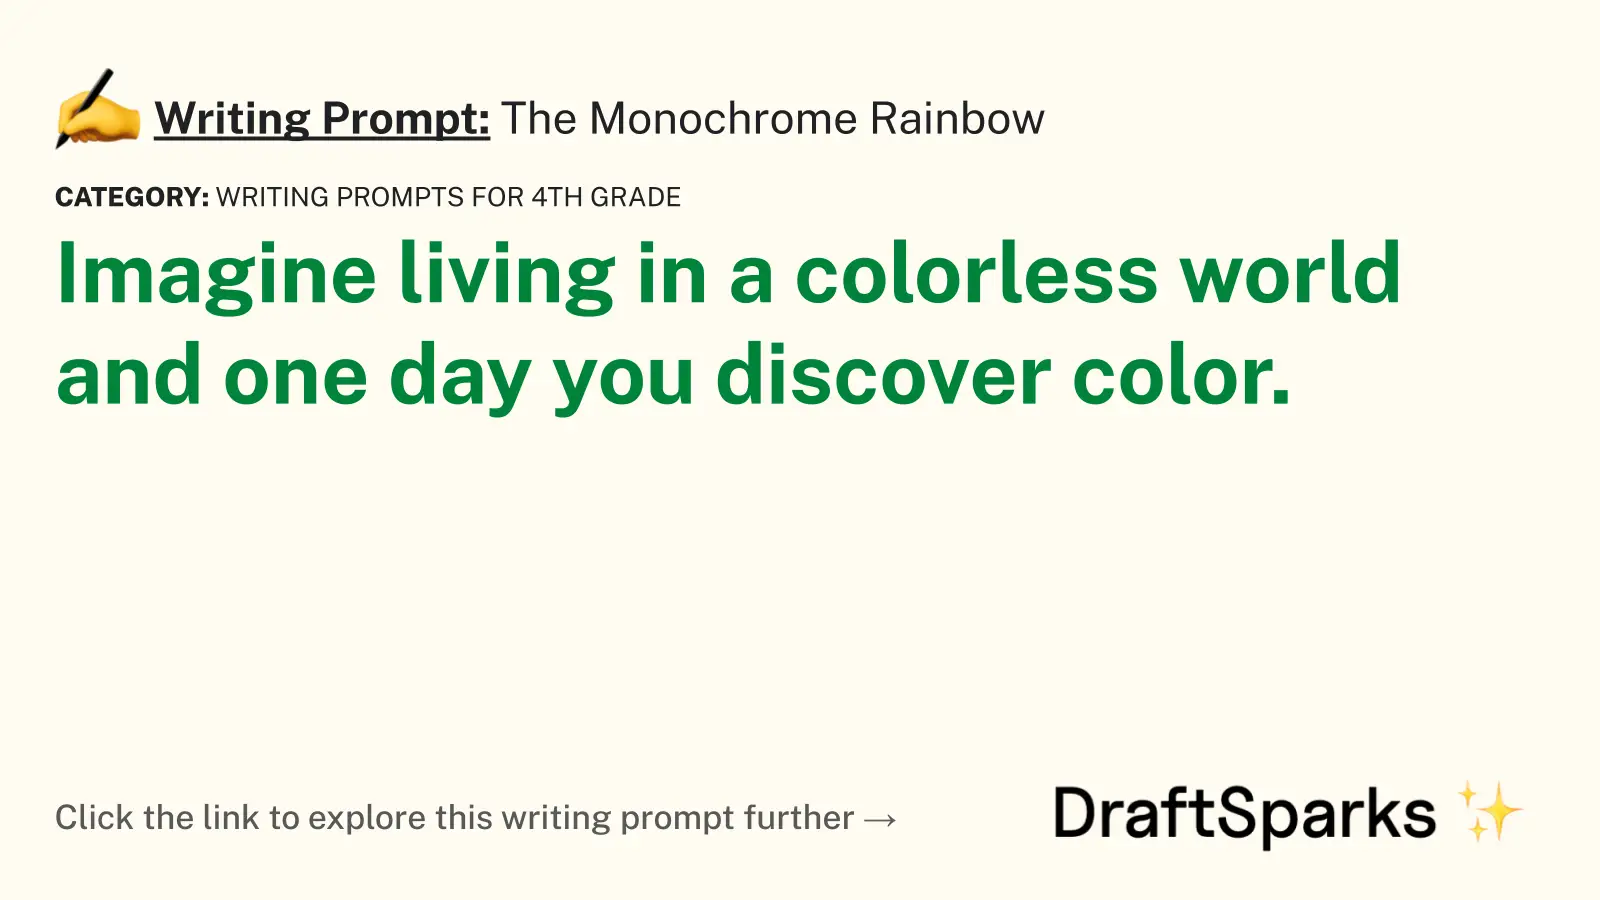 The Monochrome Rainbow